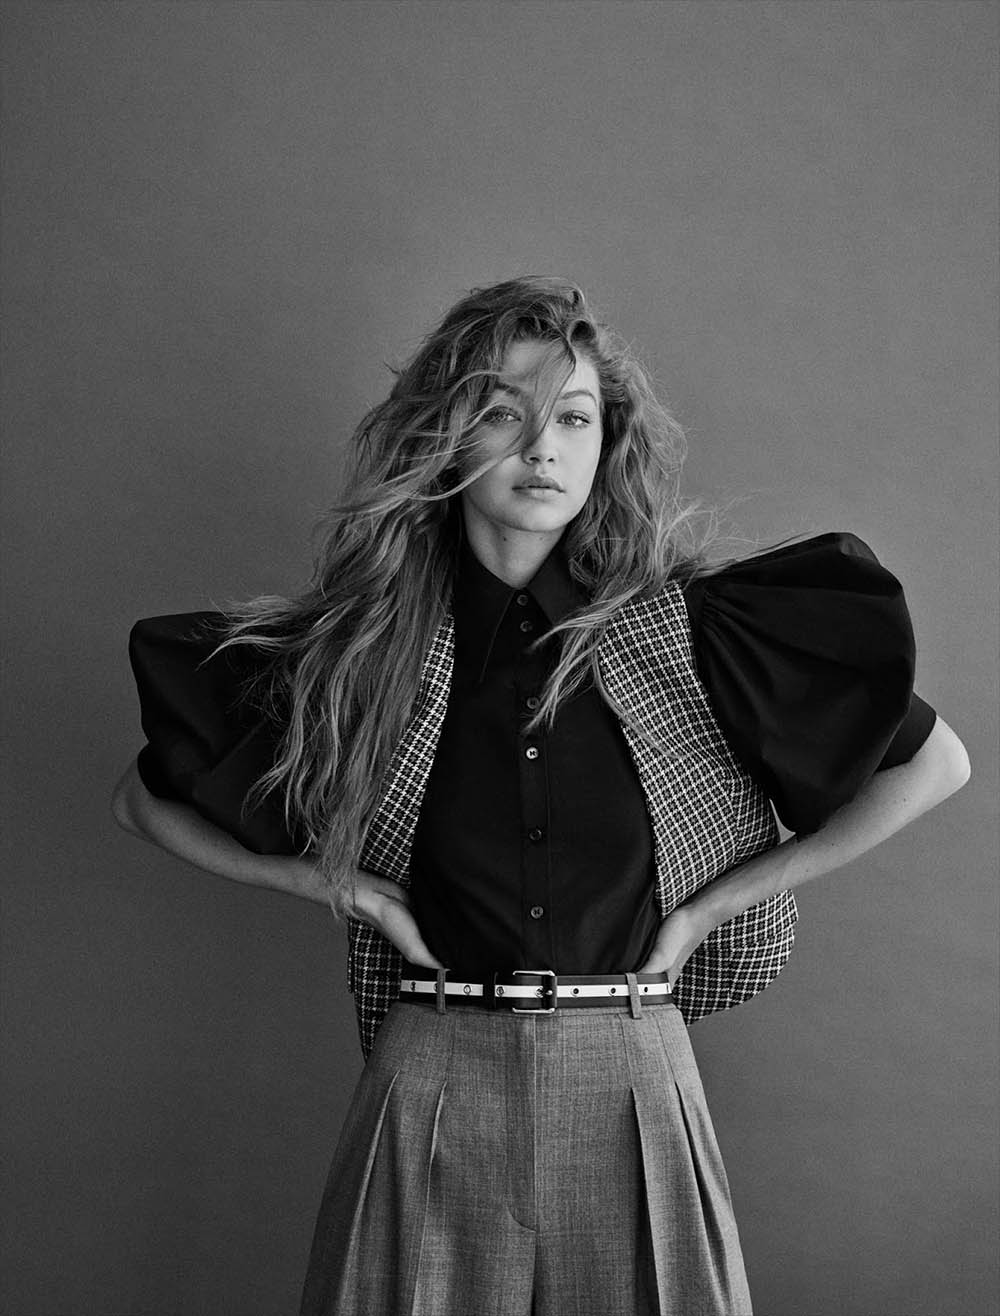 Gigi Hadid covers Vogue Germany November 2019 by Giampaolo Sgura